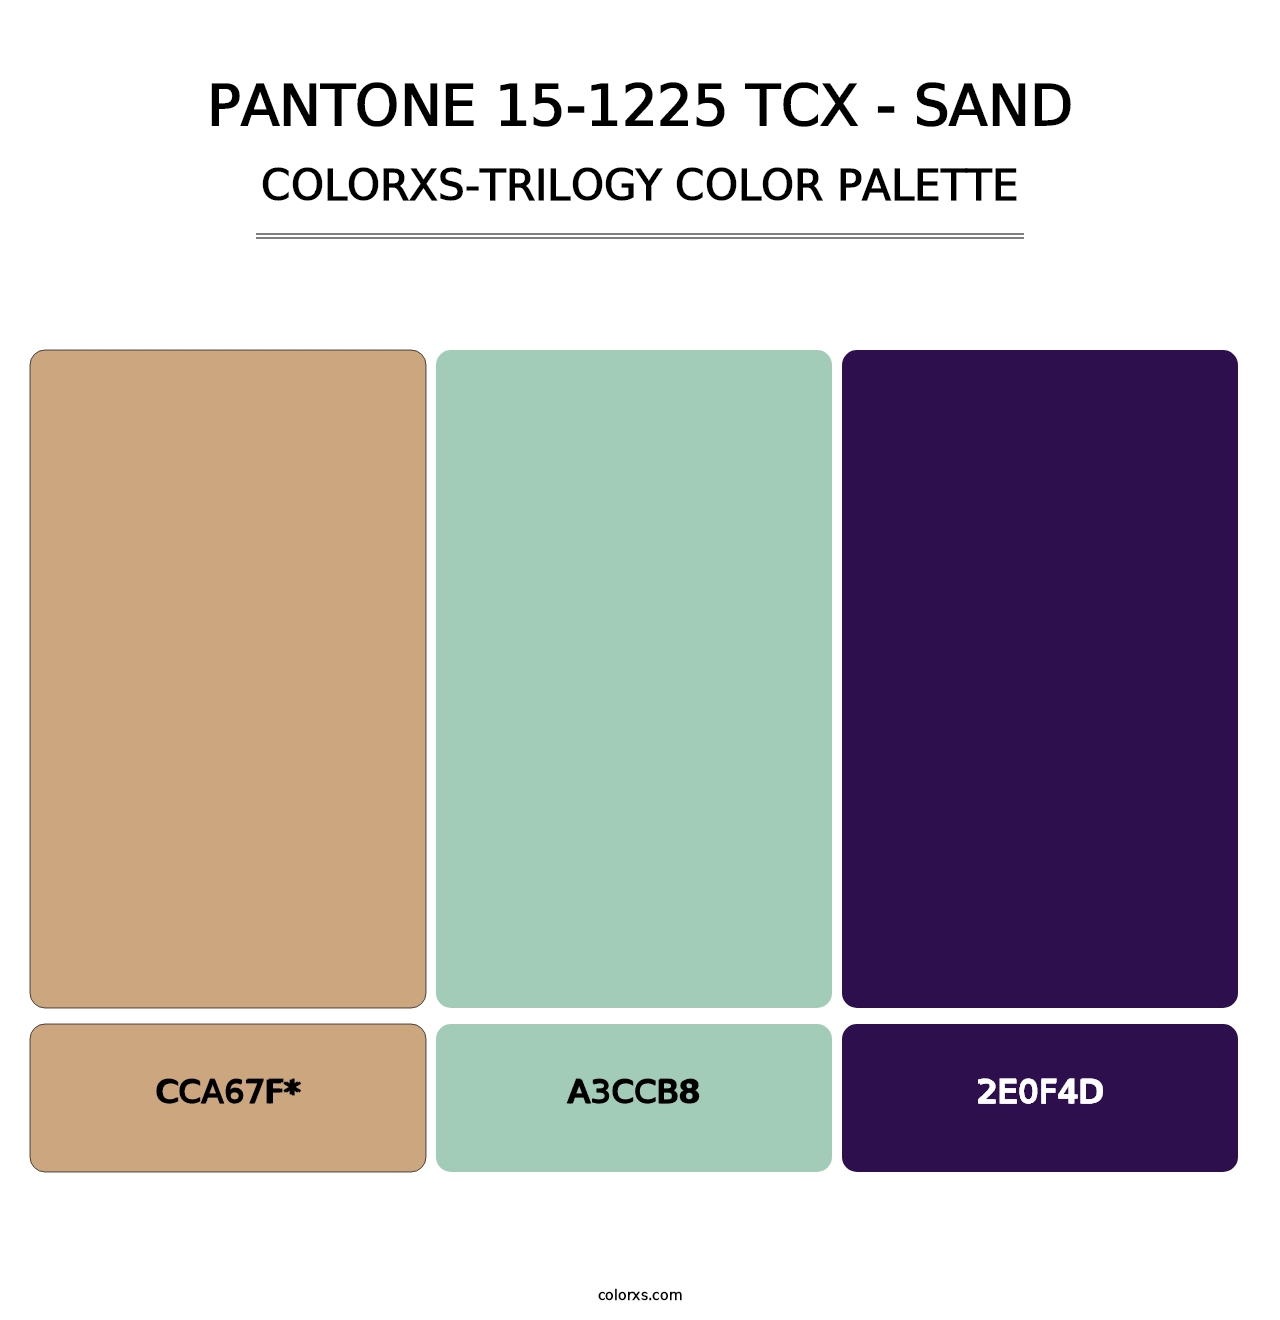 PANTONE 15-1225 TCX - Sand - Colorxs Trilogy Palette